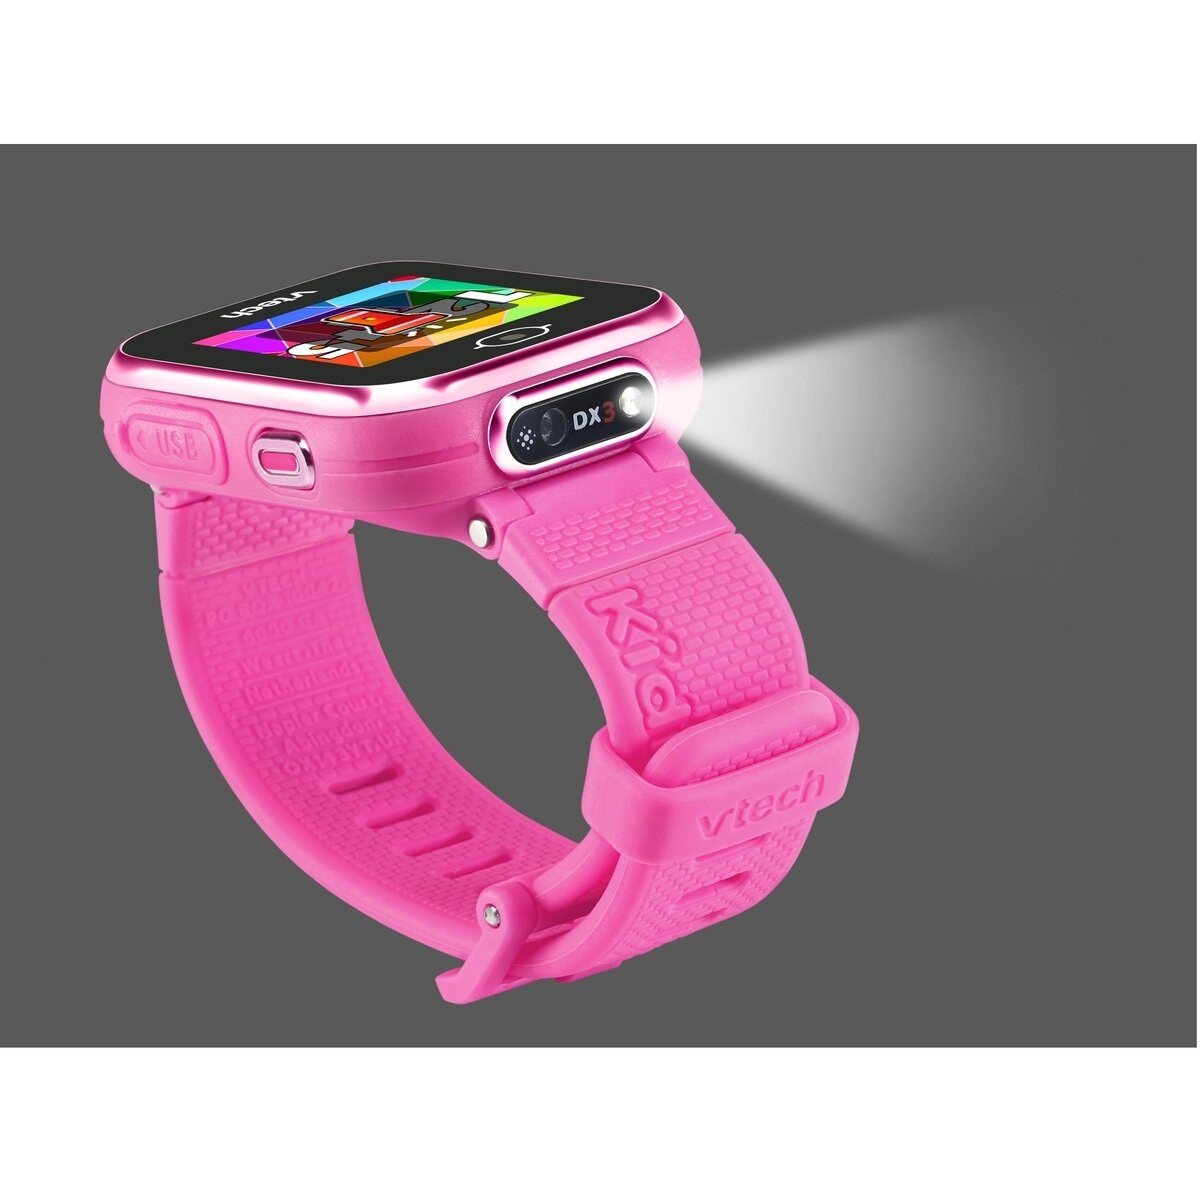 Kidizoom Smart Watch DX2 ヴィテック キッズズーム スマートウォッチ